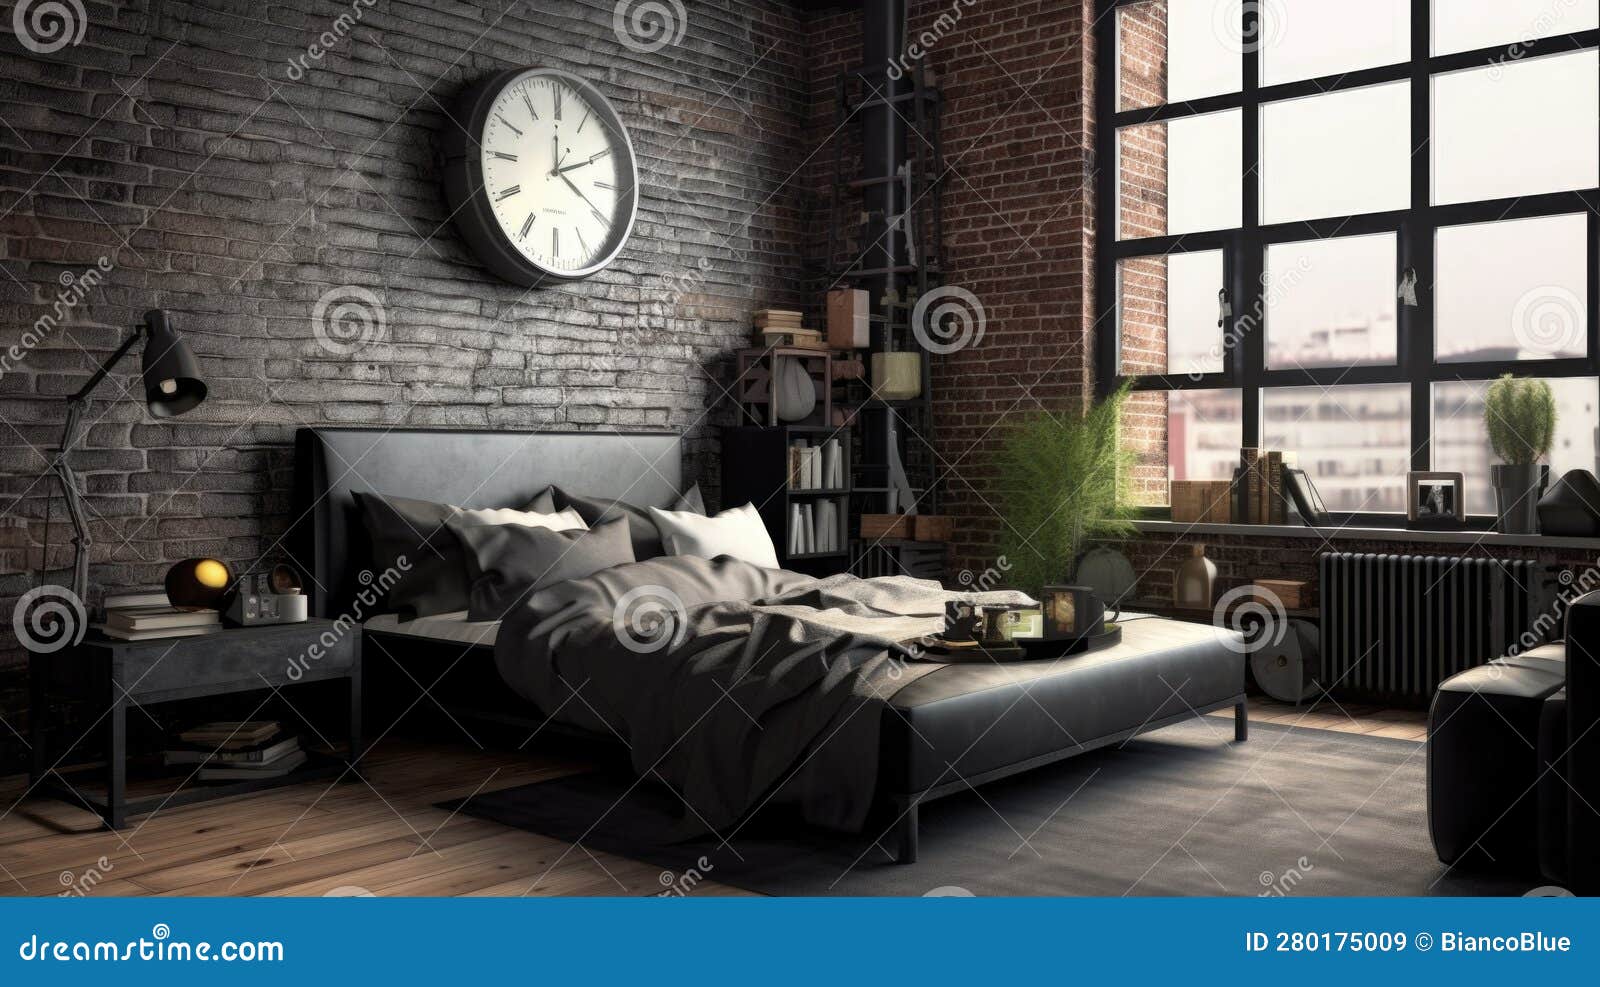 Bedroom Decor, Home Interior Design . Industrial Minimalist Style ...